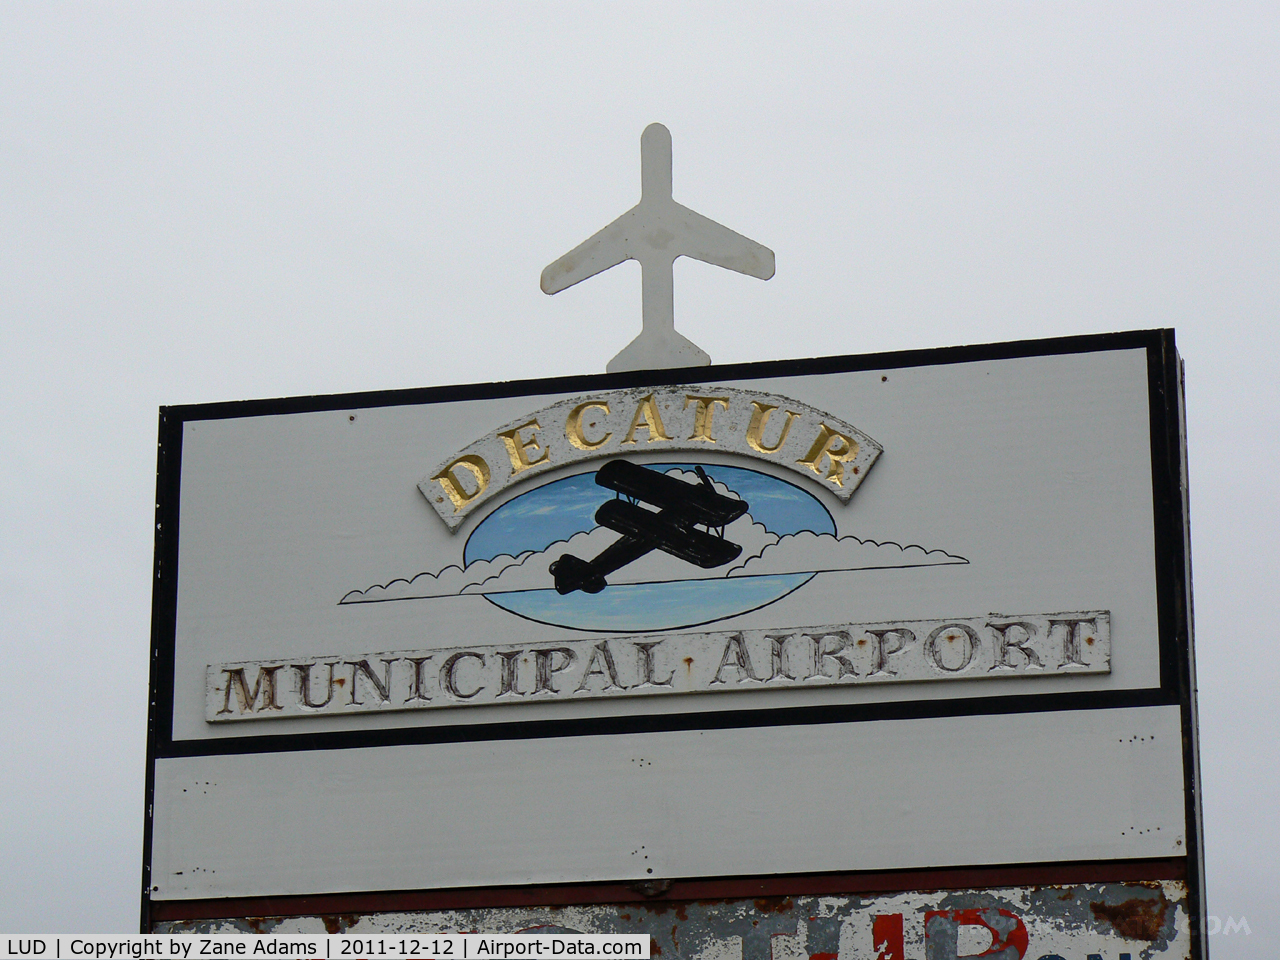 Decatur Municipal Airport (LUD) - Decatur, TX